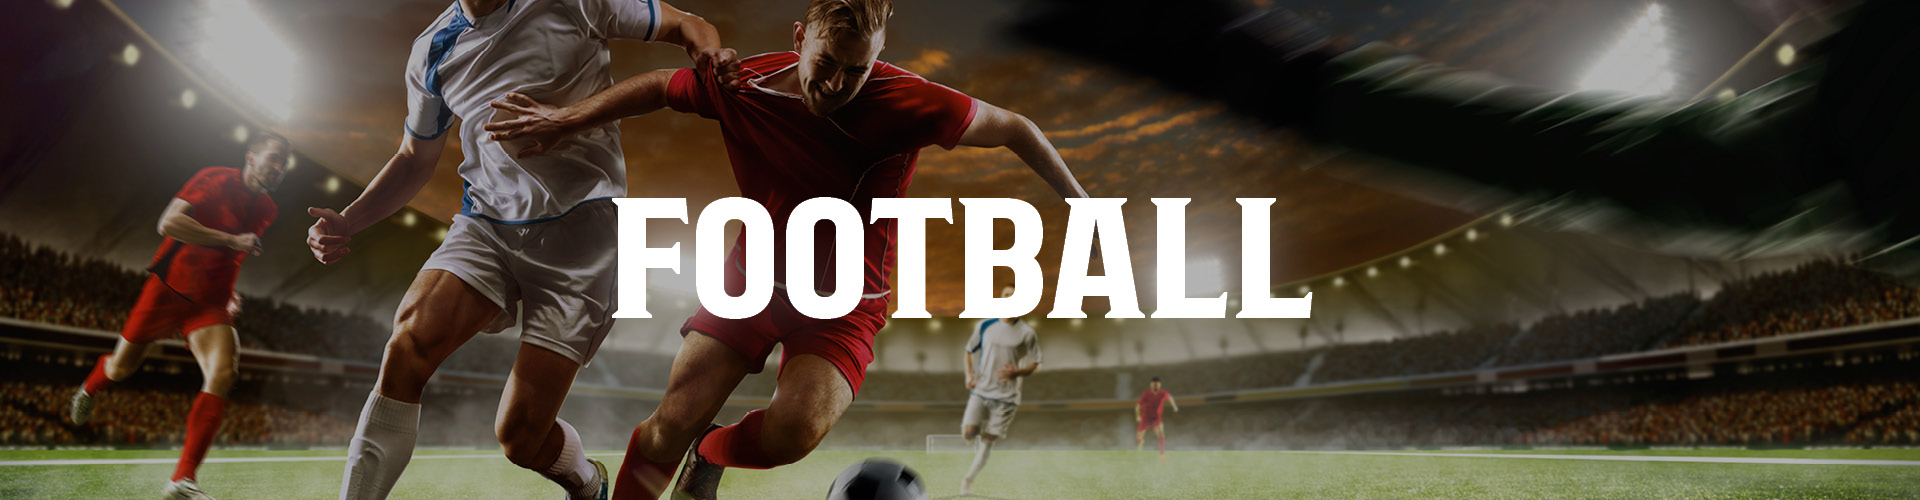 Watch Live Football in Letchworth Garden City at The Platform Pub